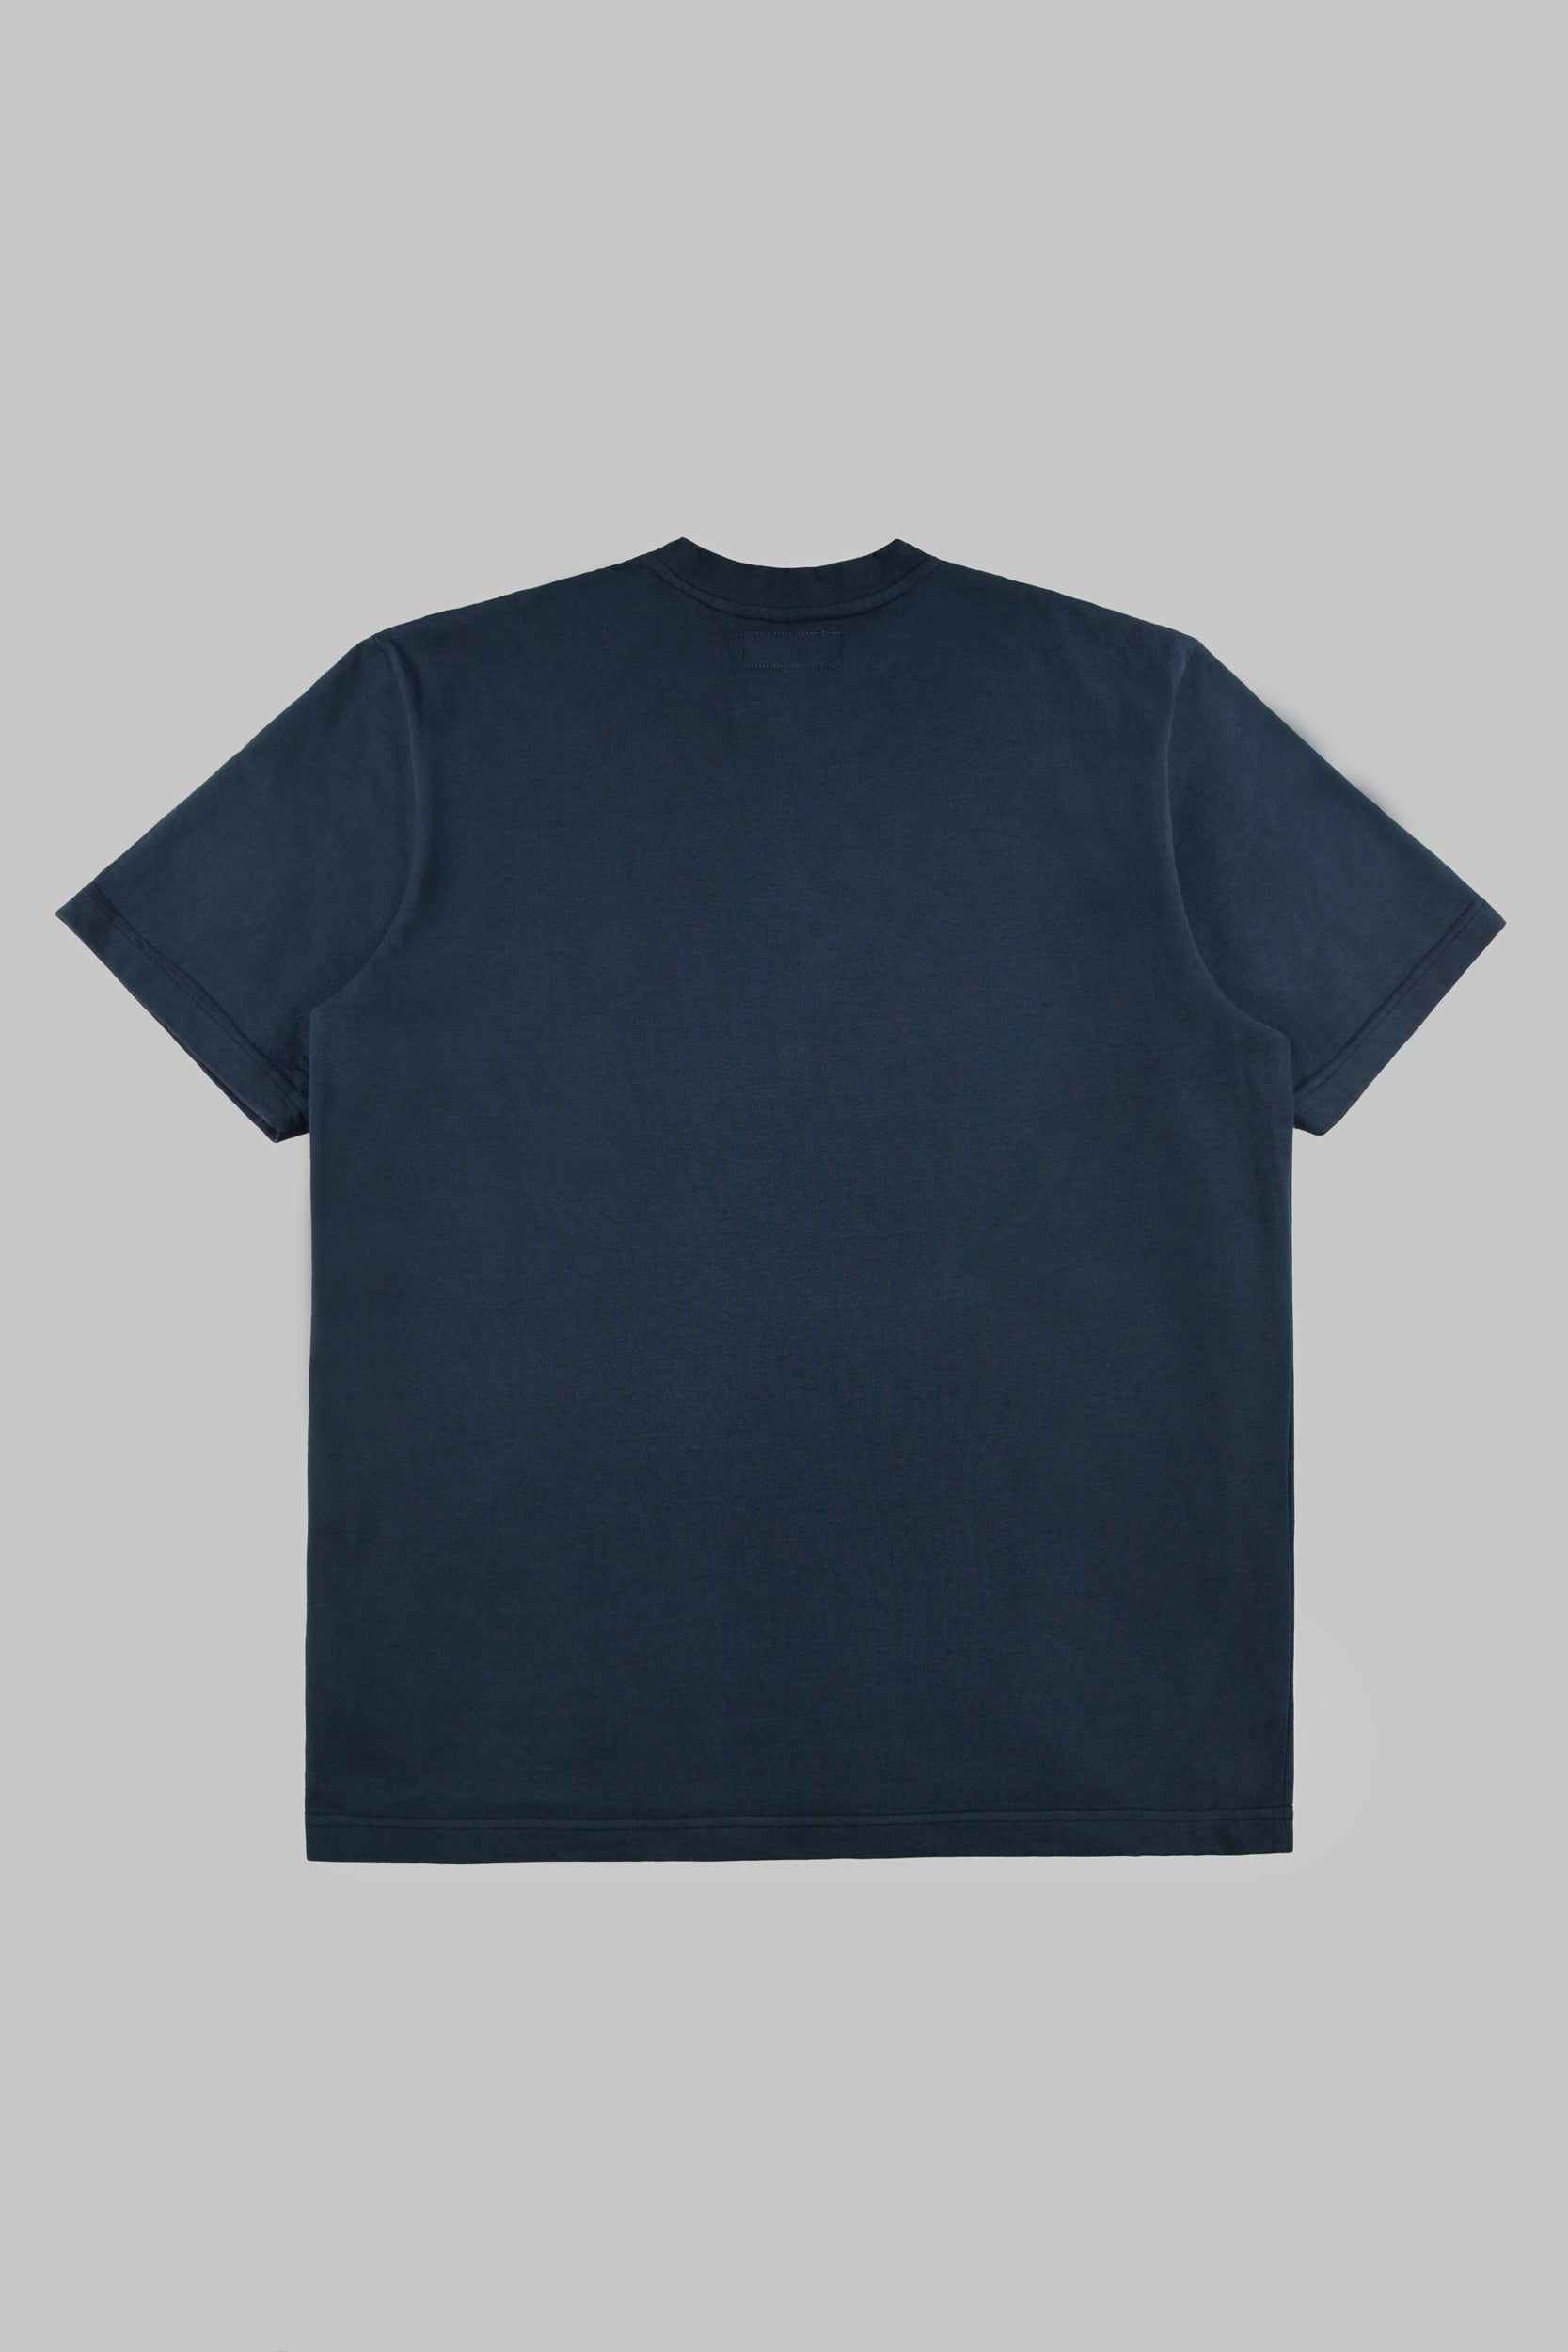 Pocket T-Shirt Blue Black